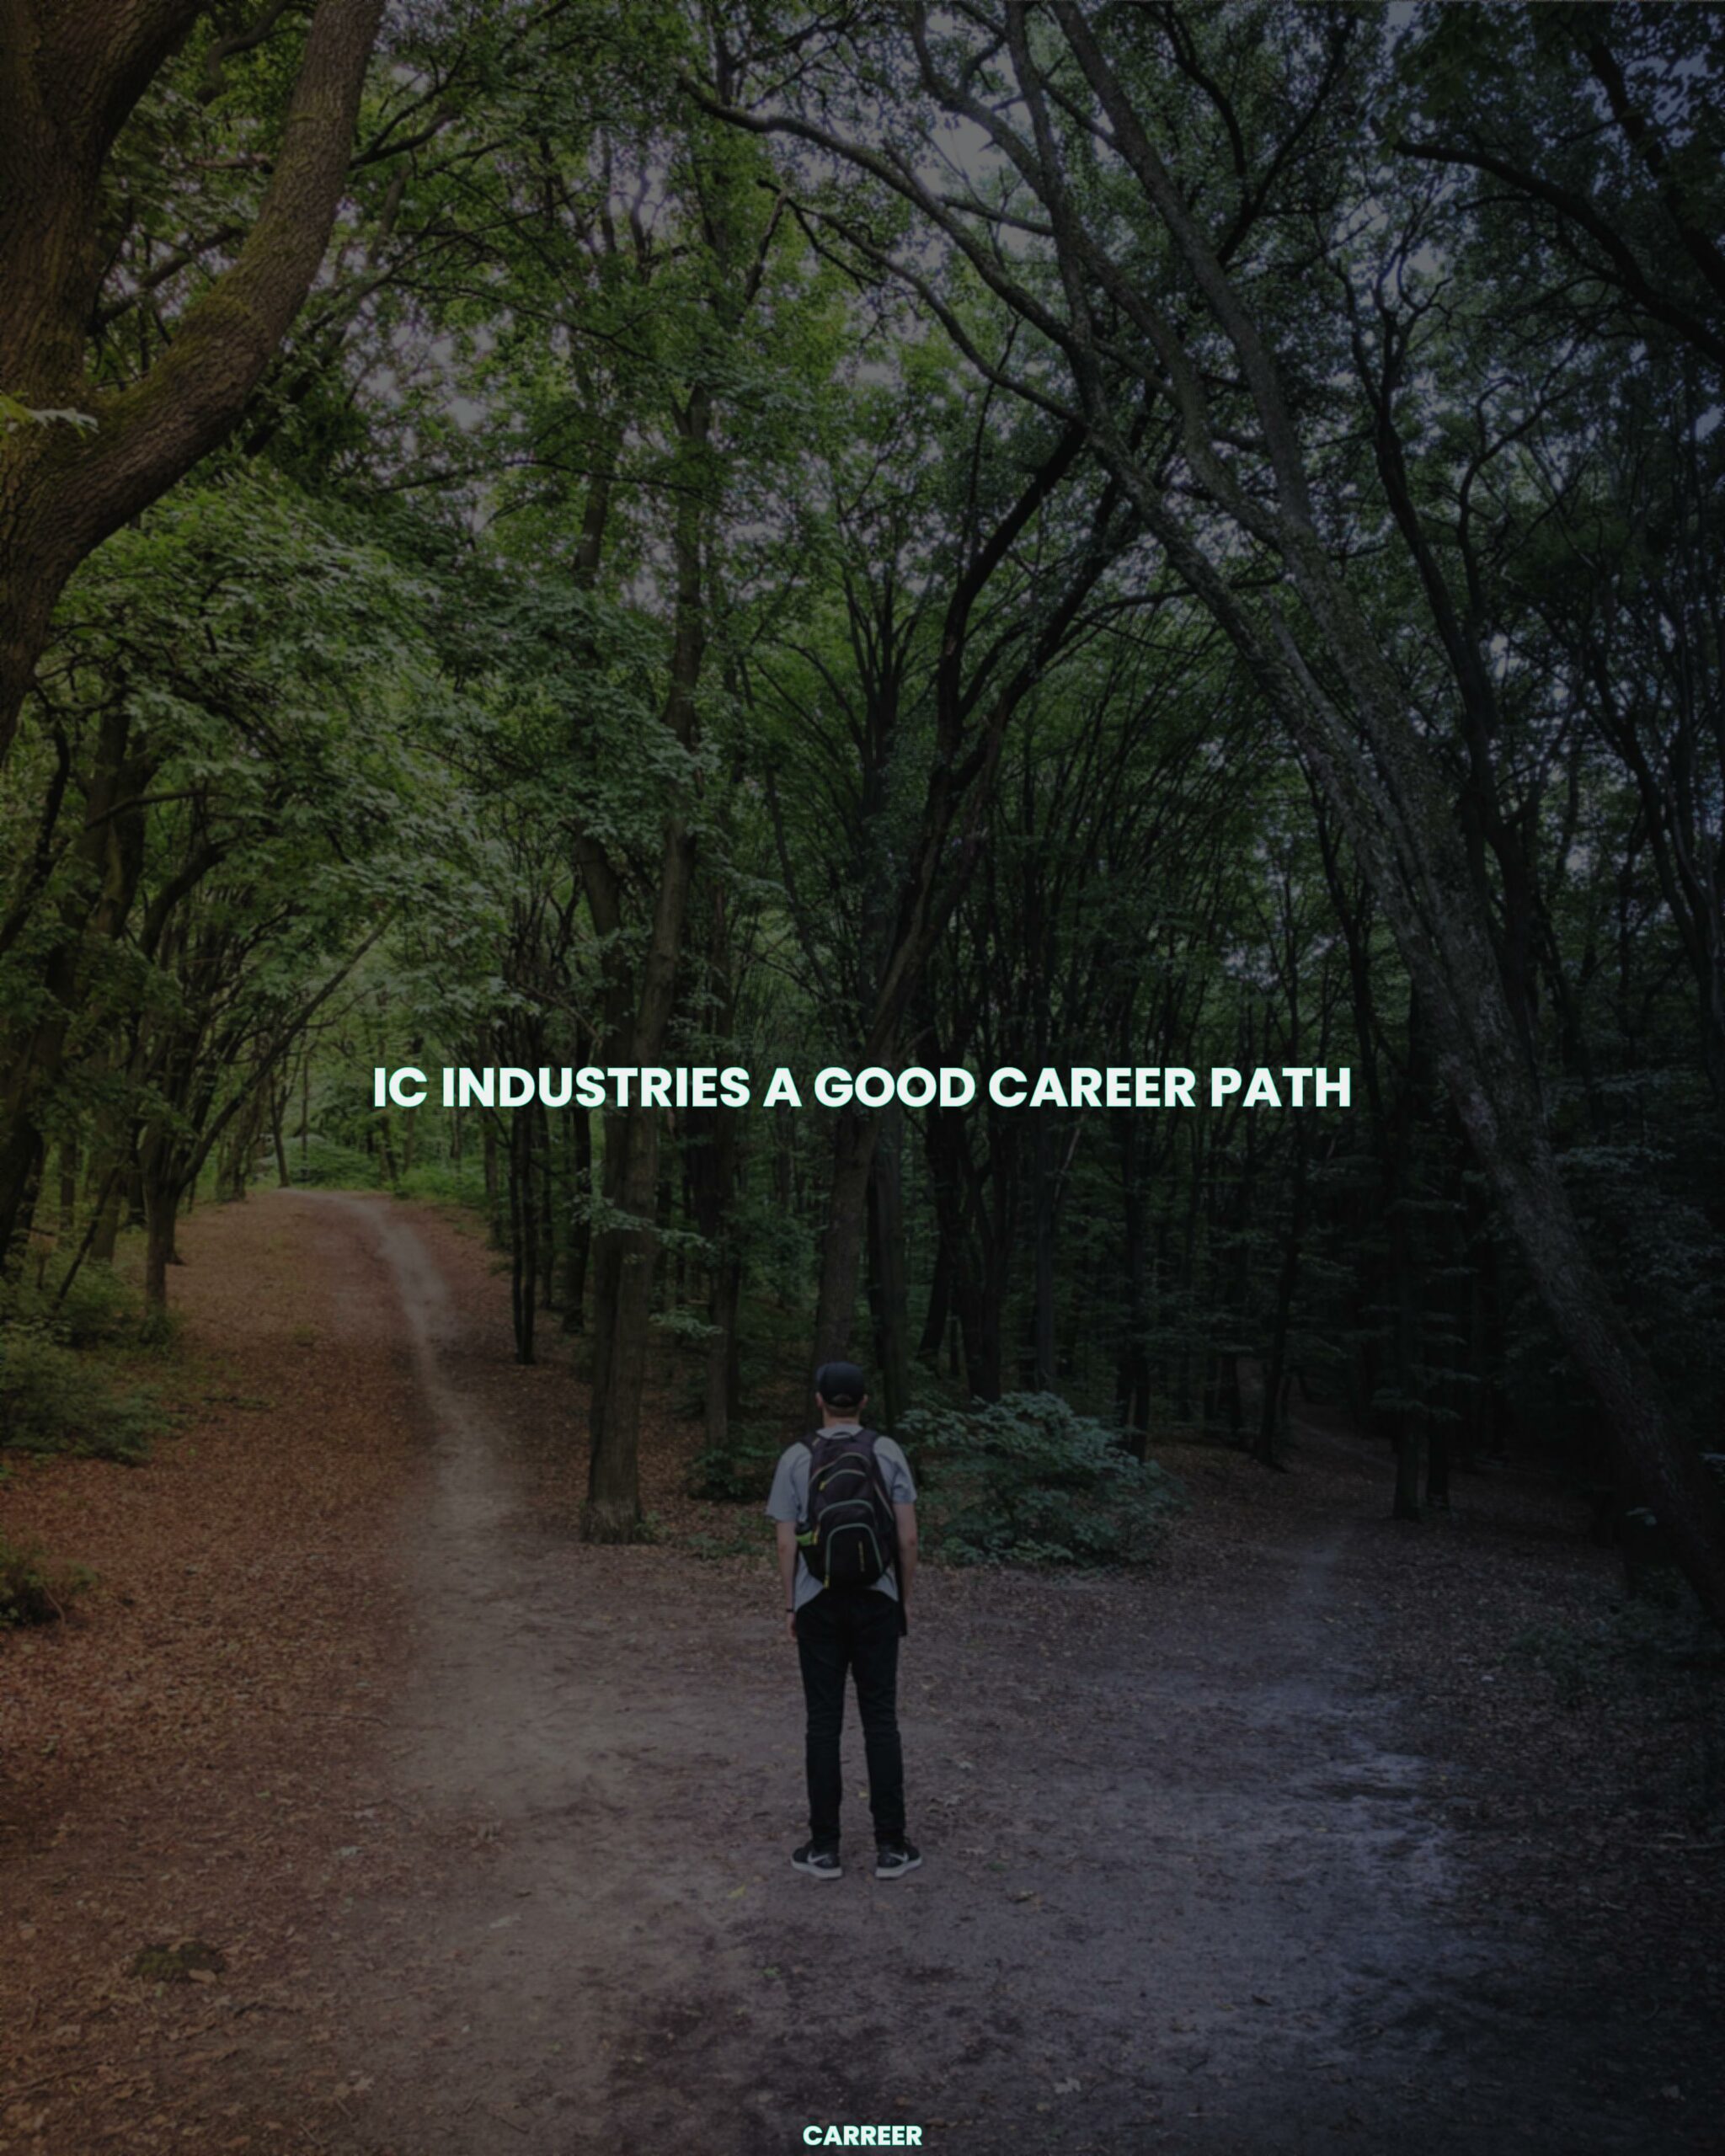 Ic industries a good career path